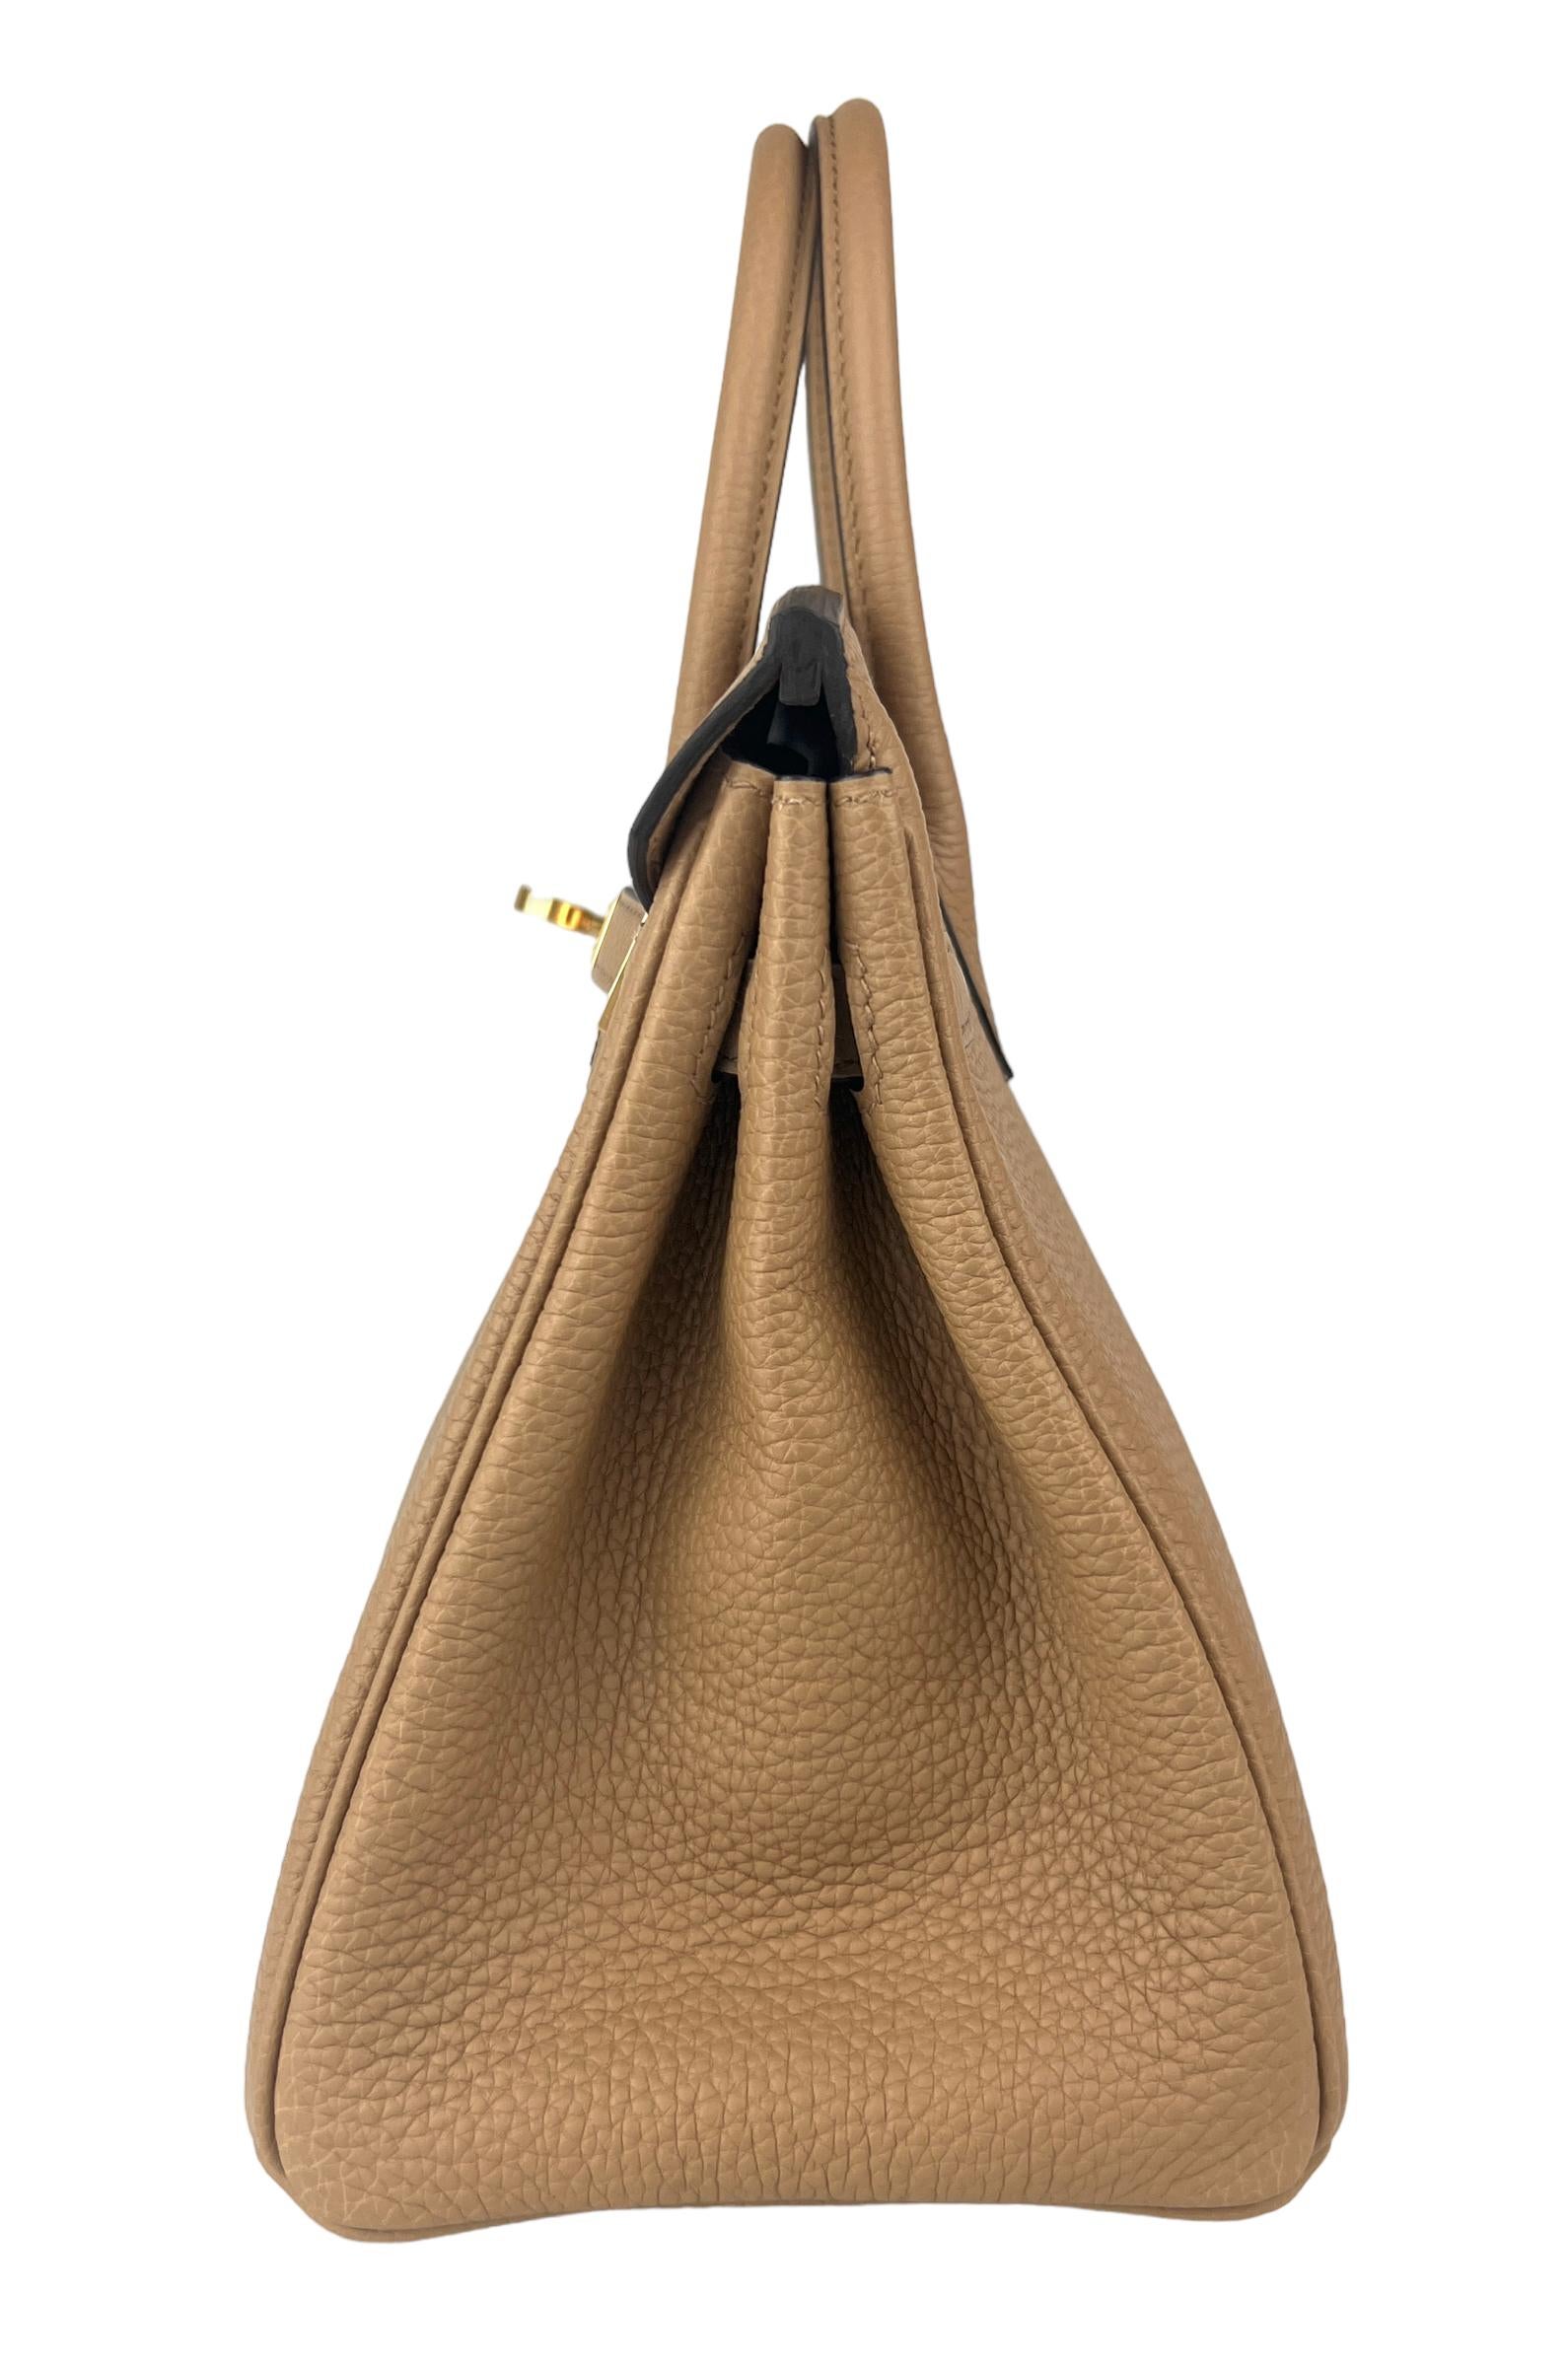 Hermes Birkin 25 Chai Tan Togo Leather Handbag Gold Hardware NEW 3